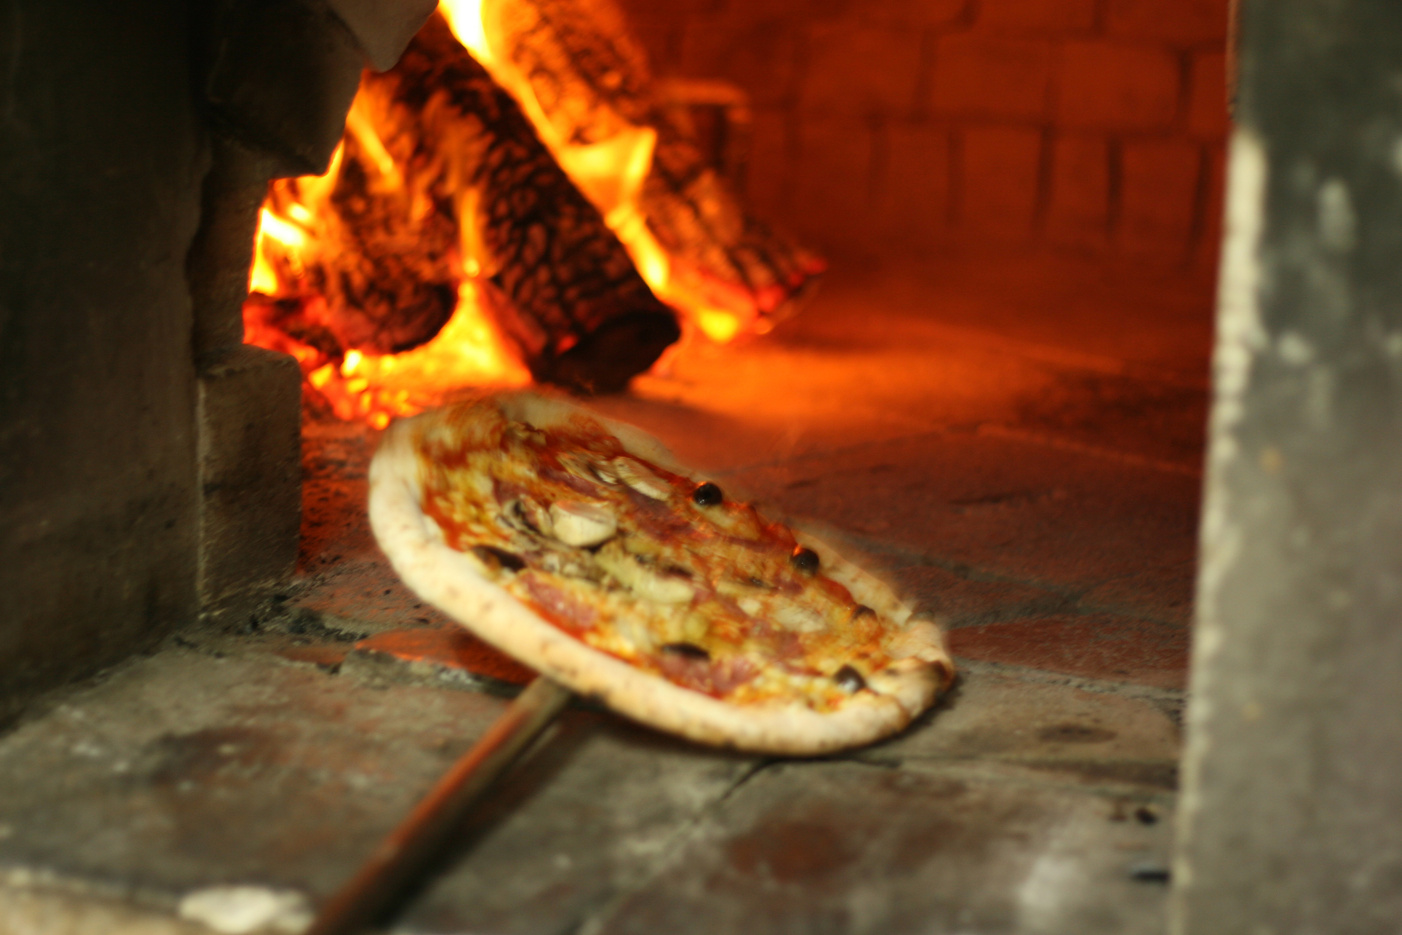 Inside the pizza wood fired owen